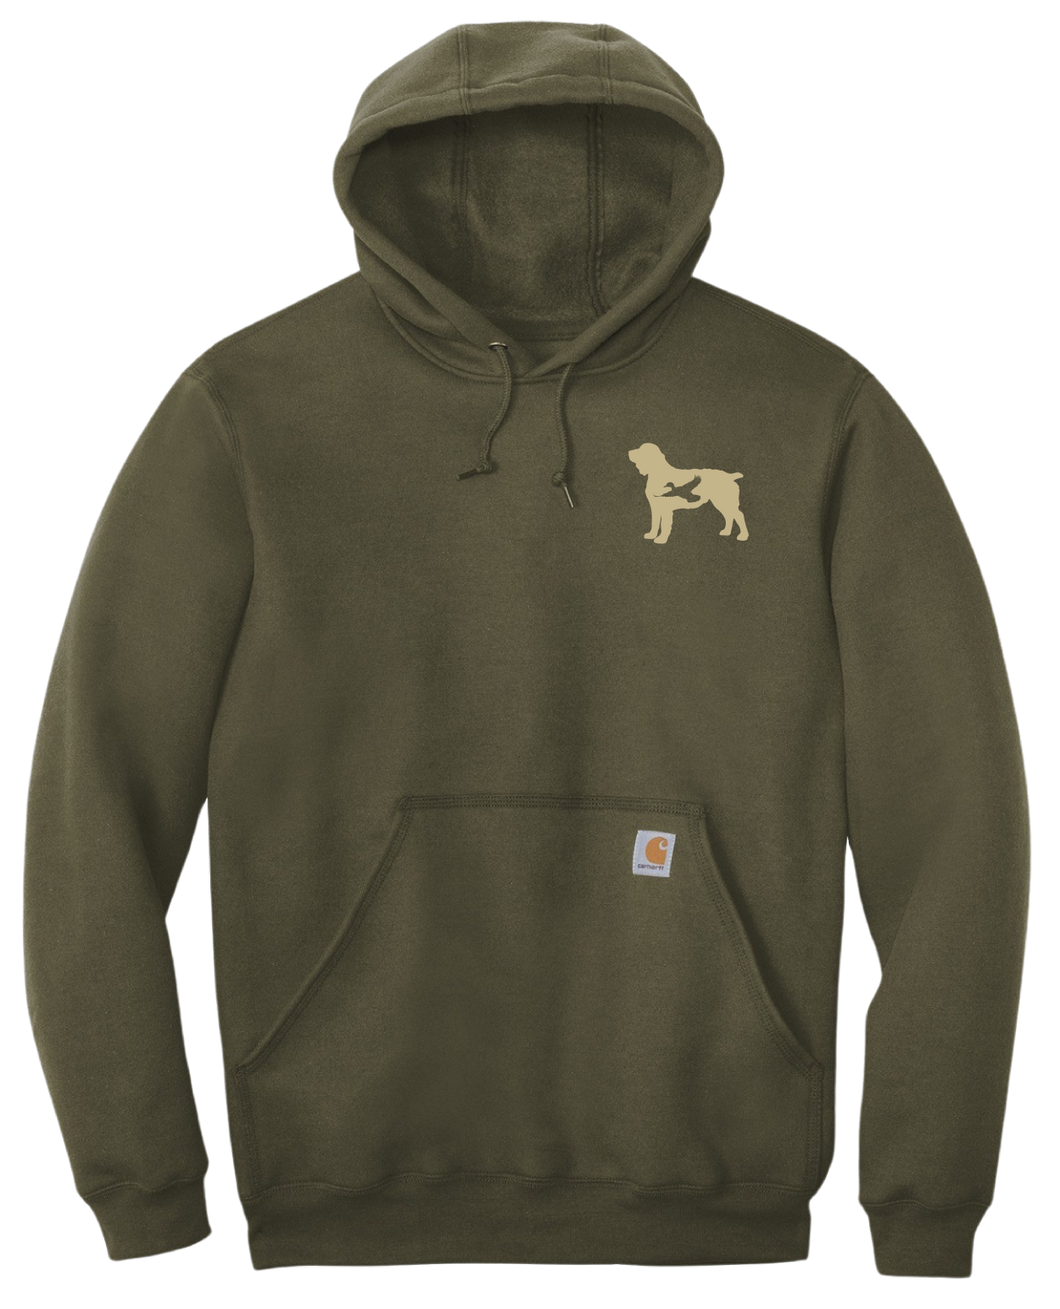 Carhartt ® Midweight Hooded Sweatshirt with Boykin Spaniel Hunting Silhouette